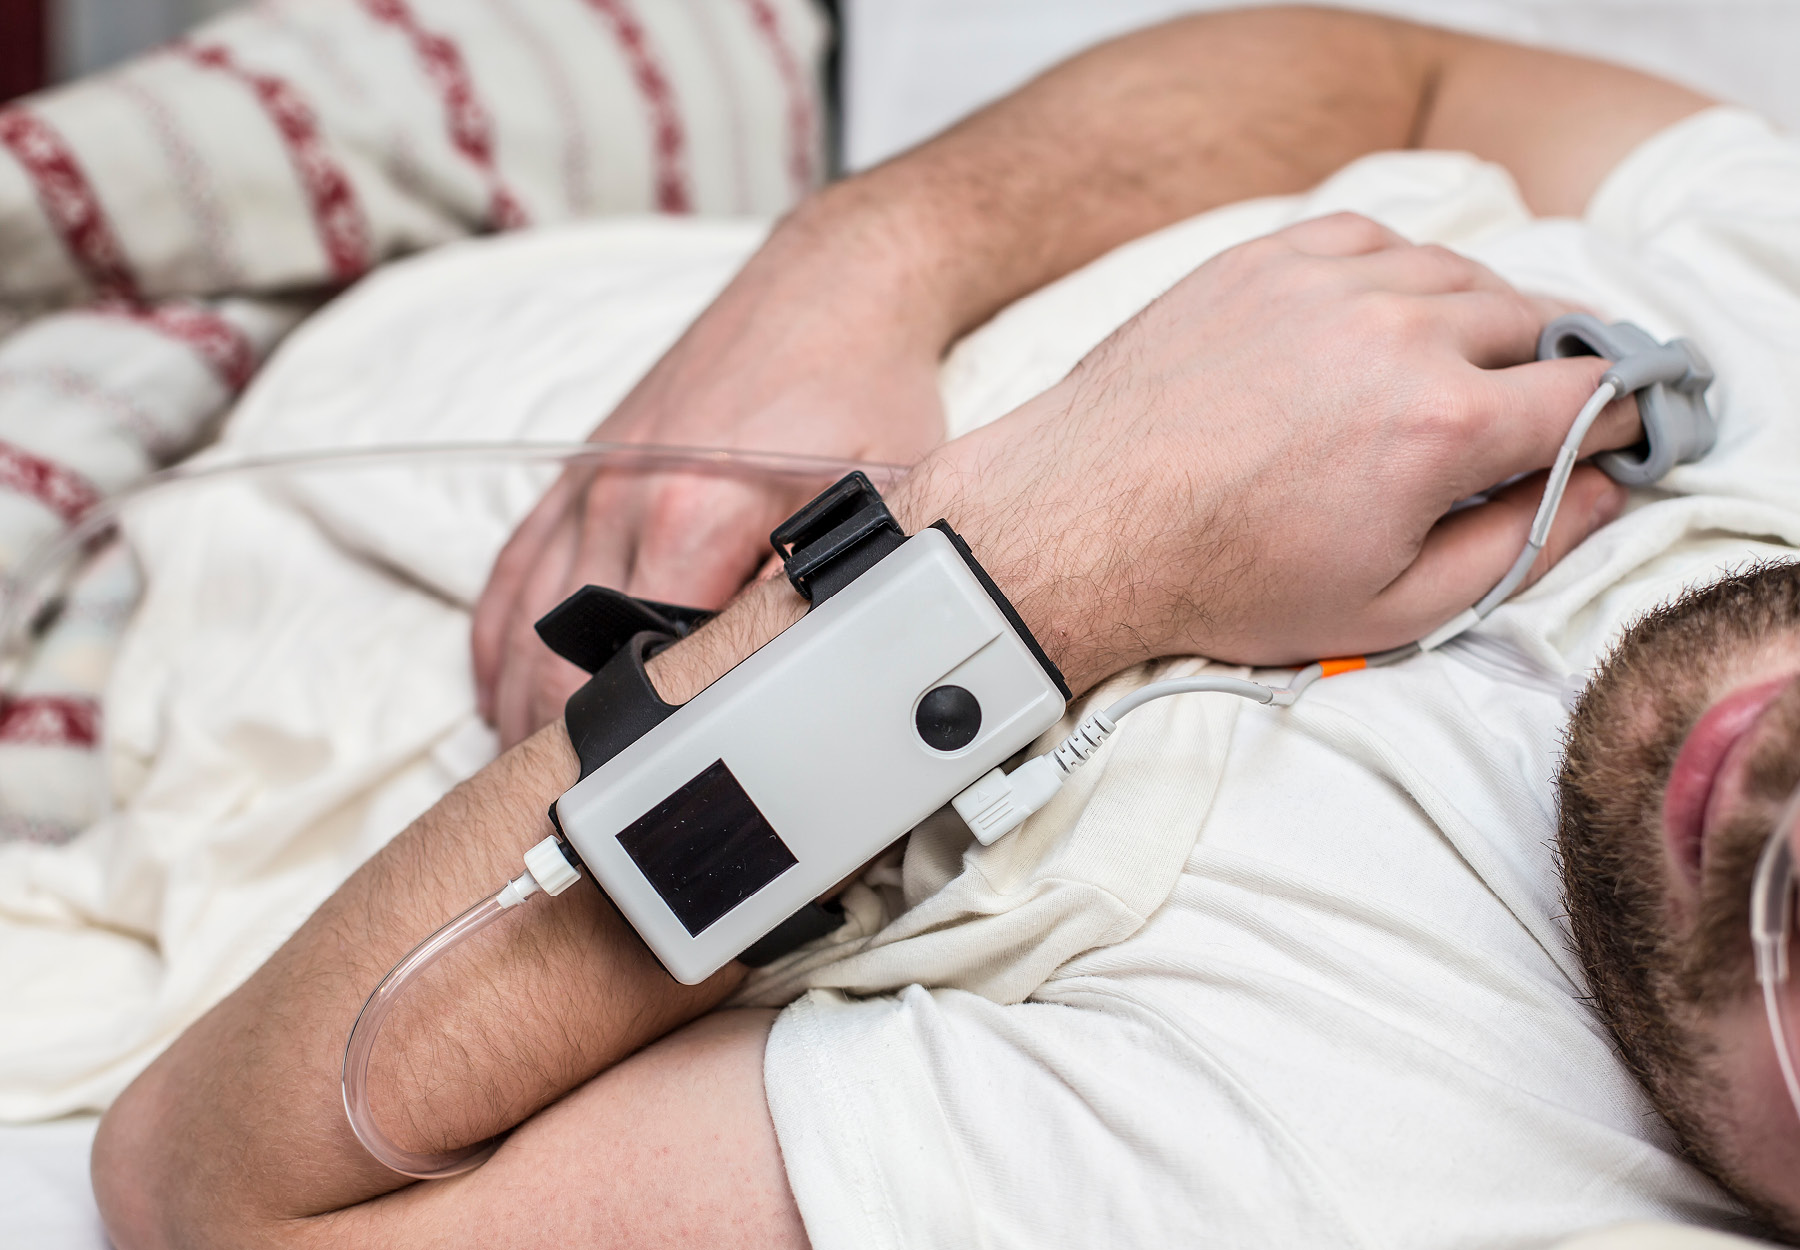 Closeup photo of man in bed who is wearing a sleep apnea monitor on his wrist. Stock photo.